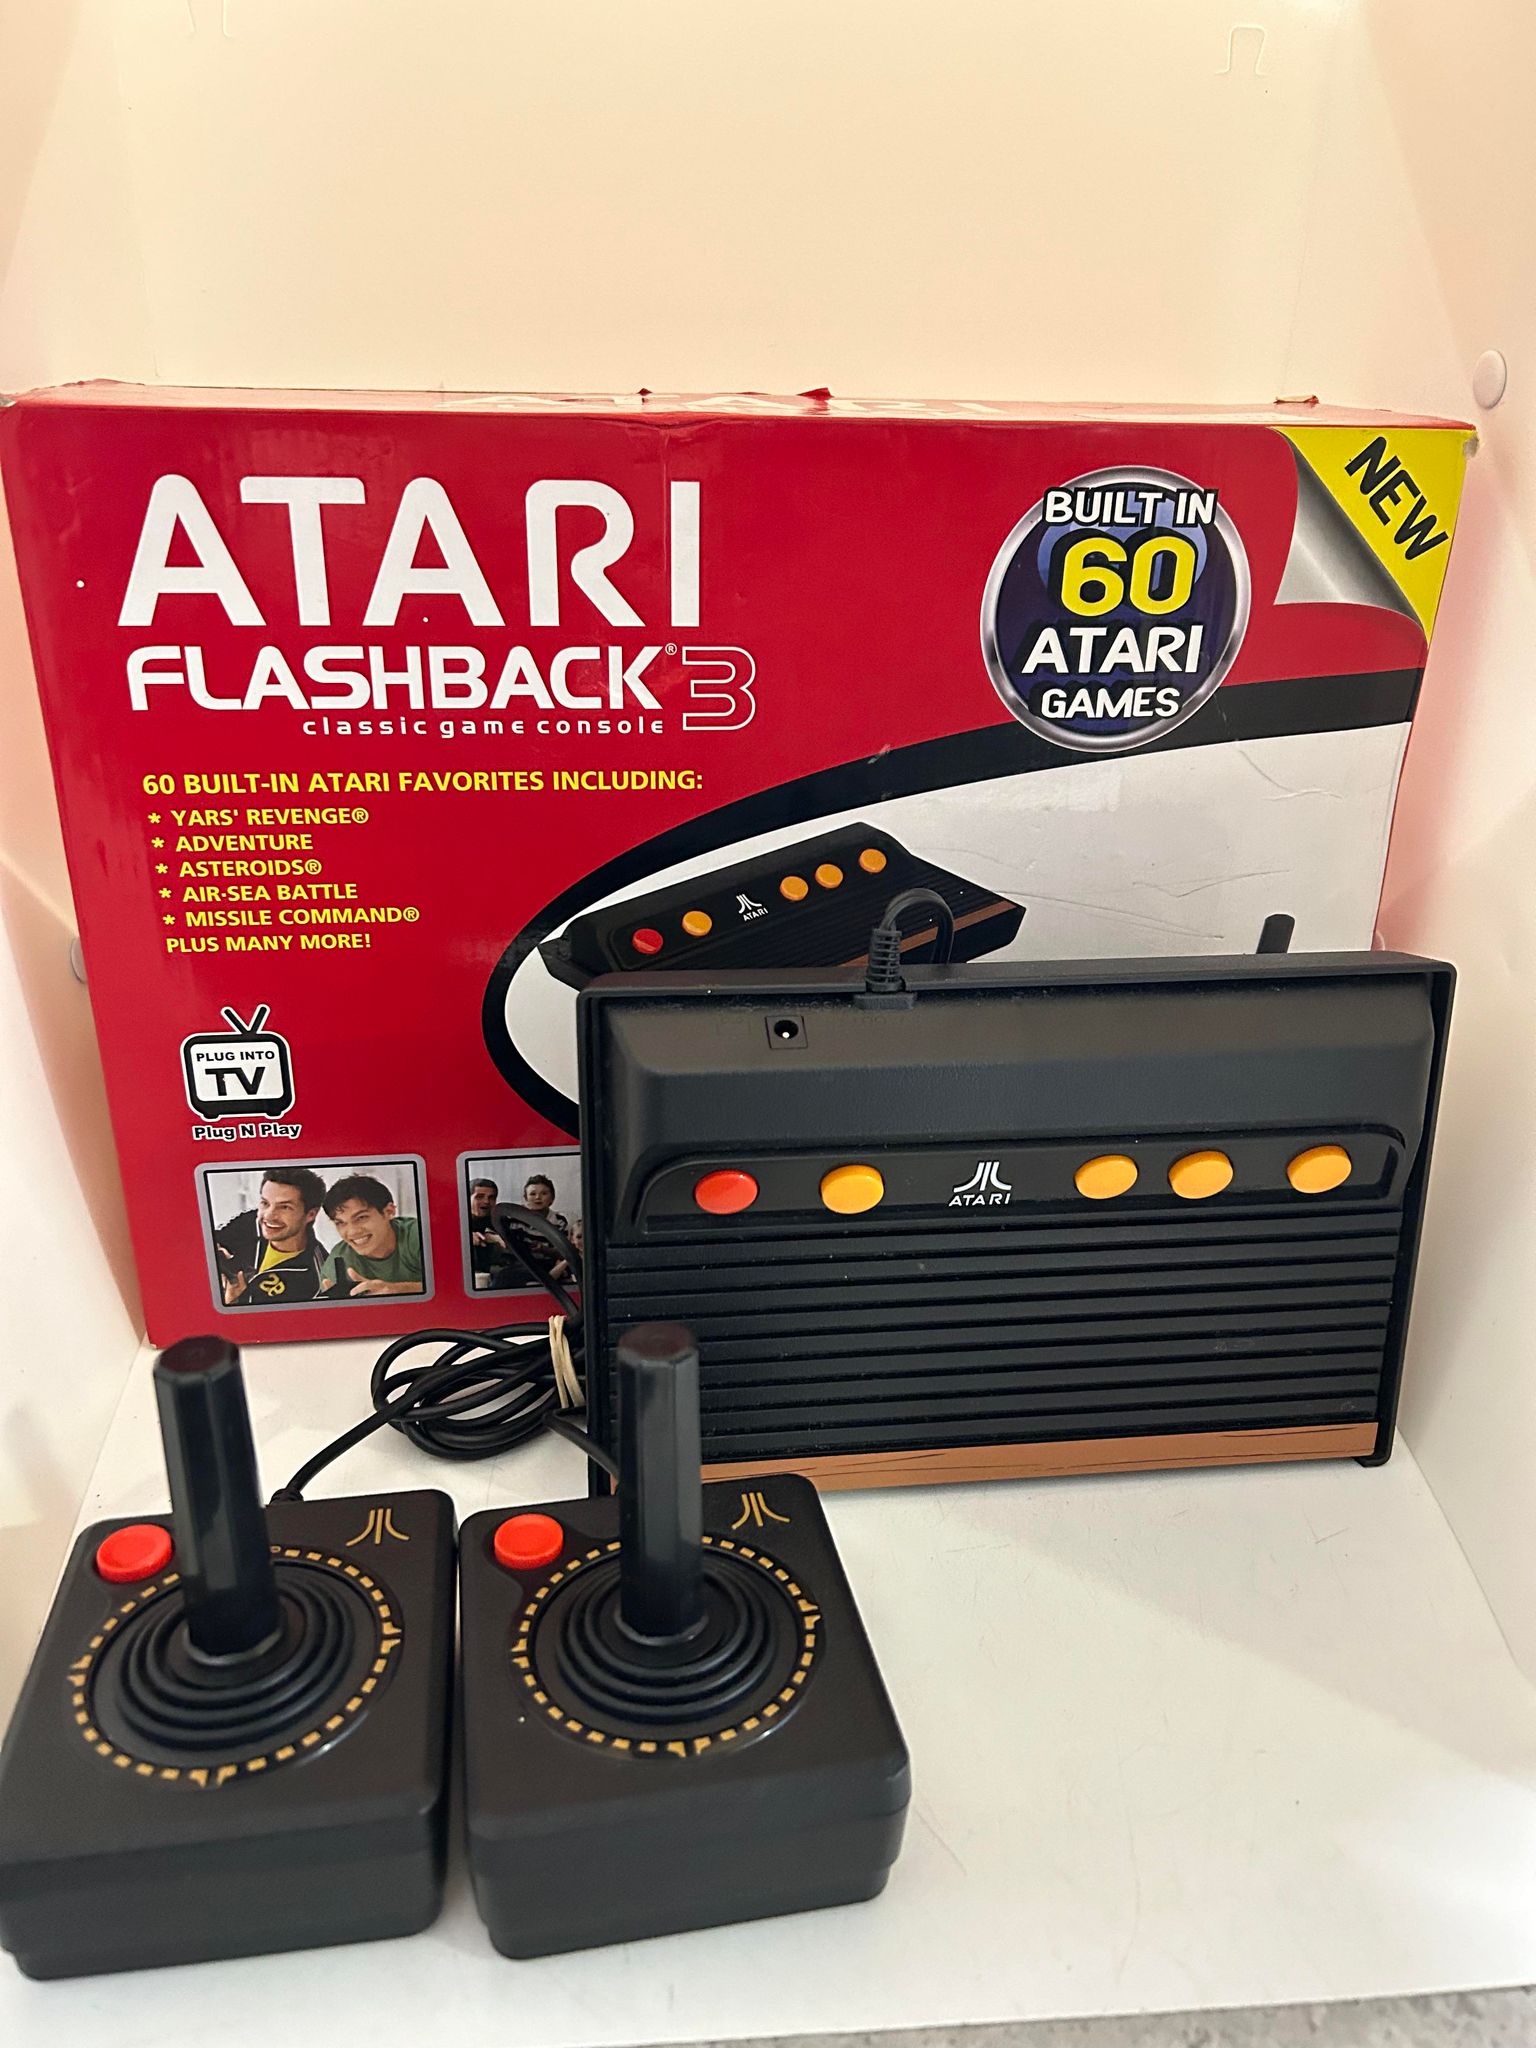 Atari Flashback 3 Classic Games Console In Original Box - 60 Built-In Games 